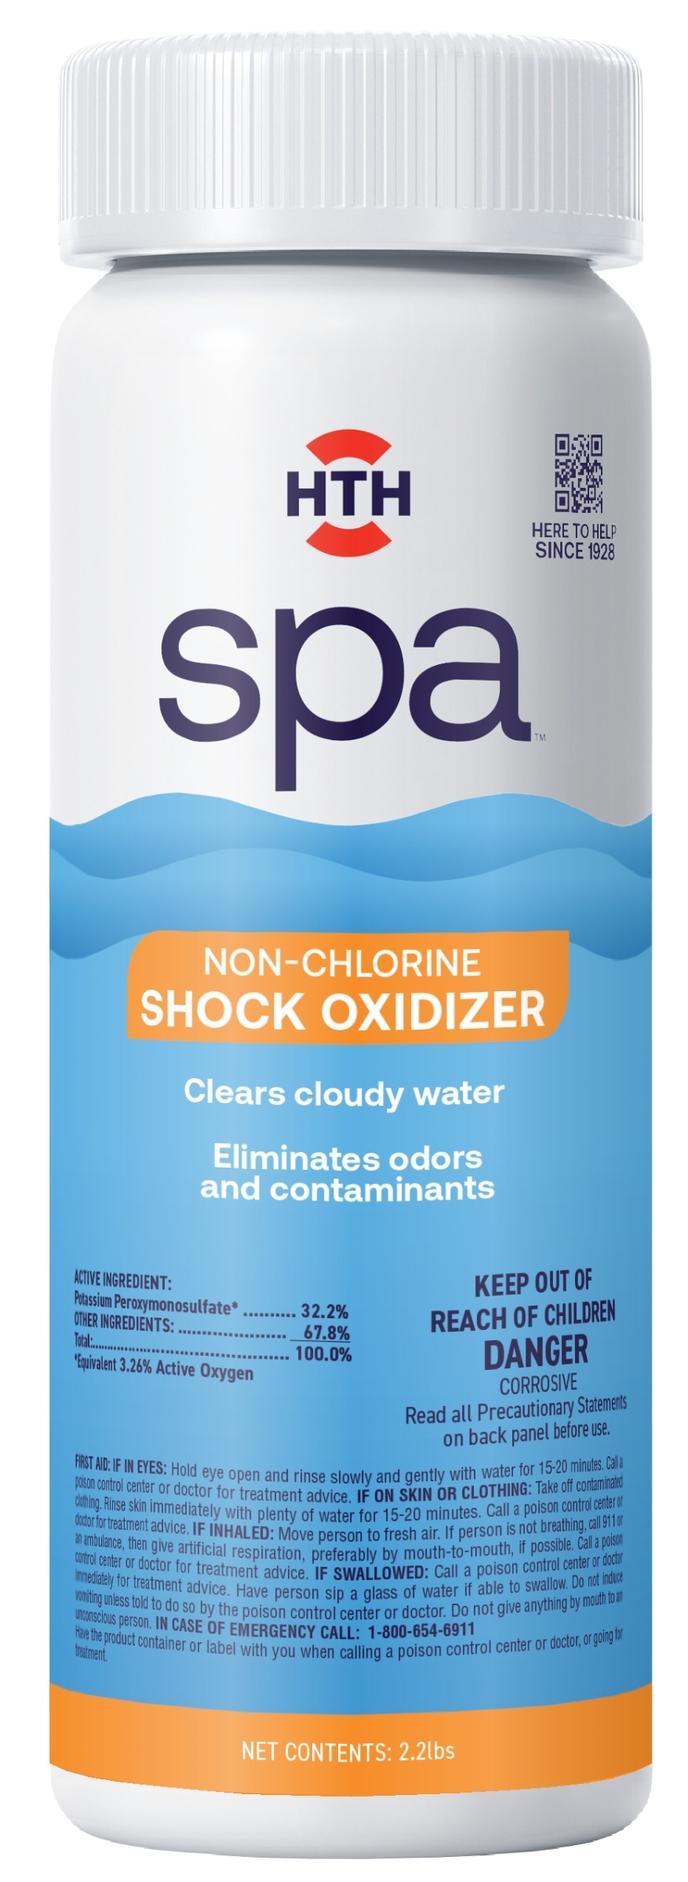 HTH Spa No Chlorine Shock Oxidizer 2.25LB